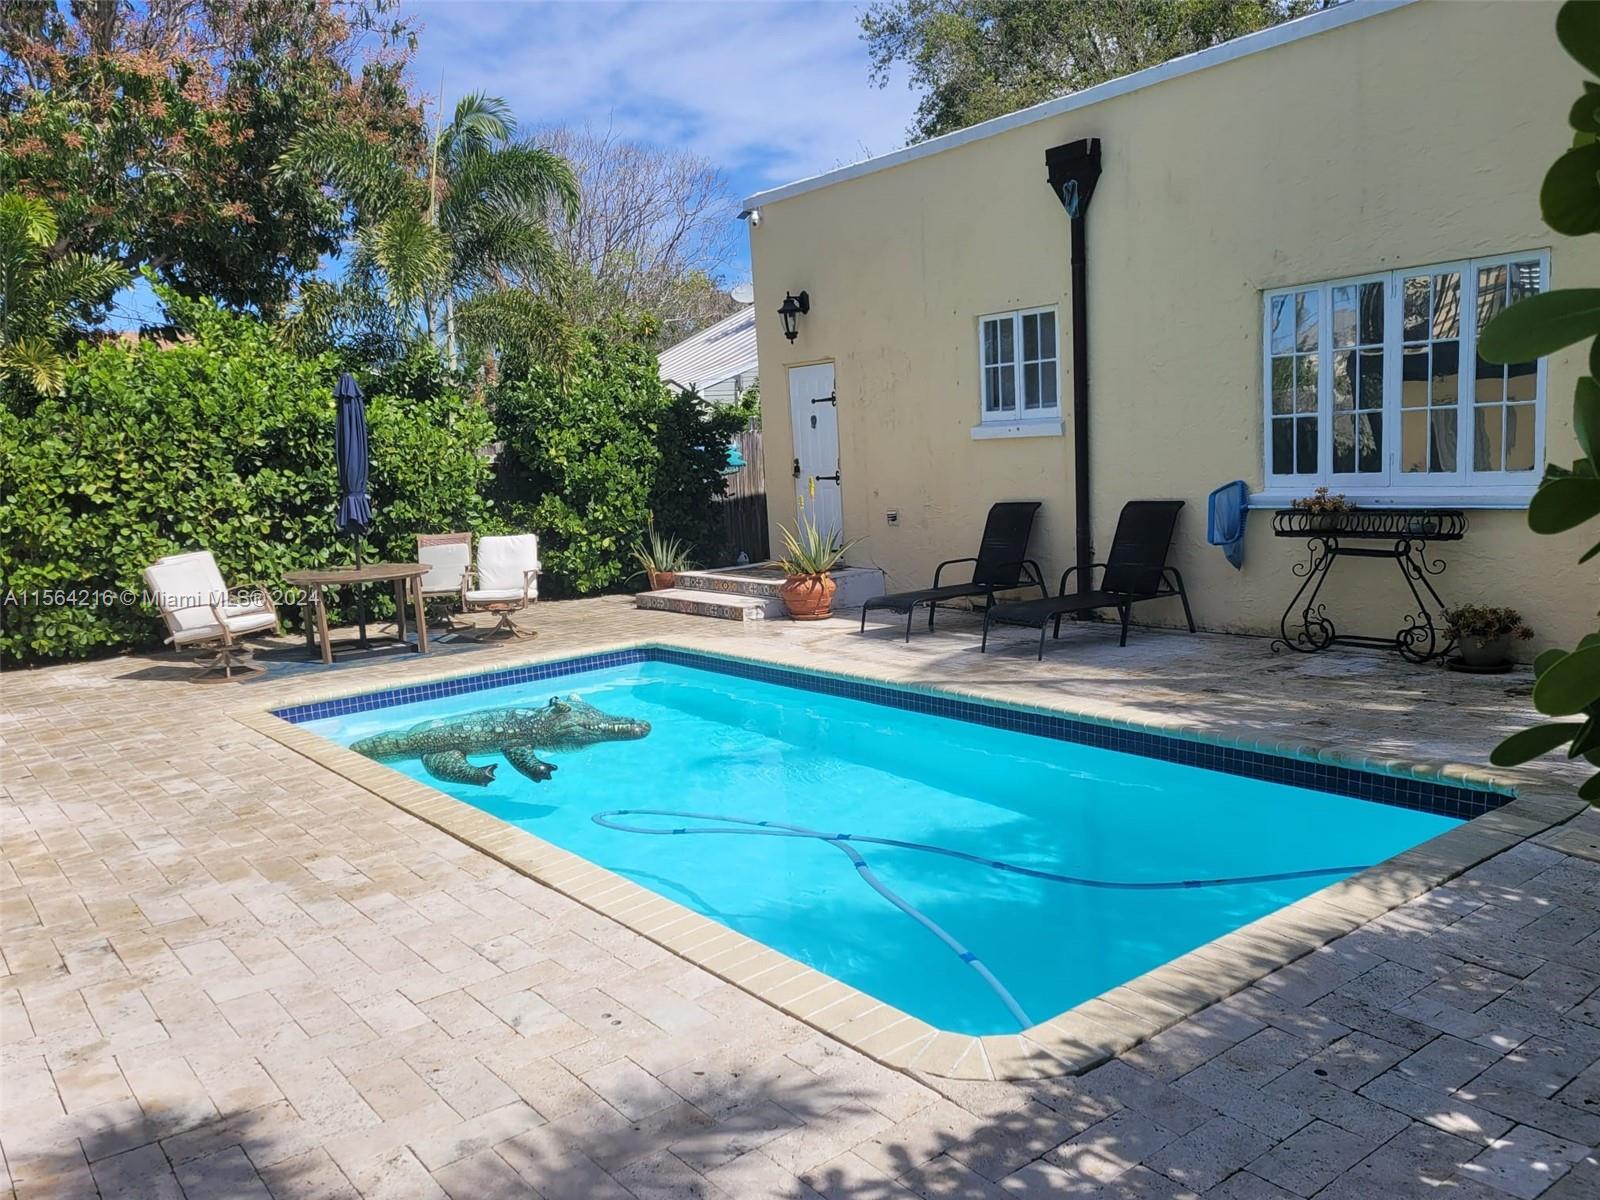 Rental Property at 801 N Federal Hwy Hwy A, Lake Worth, Palm Beach County, Florida - Bedrooms: 3 
Bathrooms: 2  - $4,879 MO.